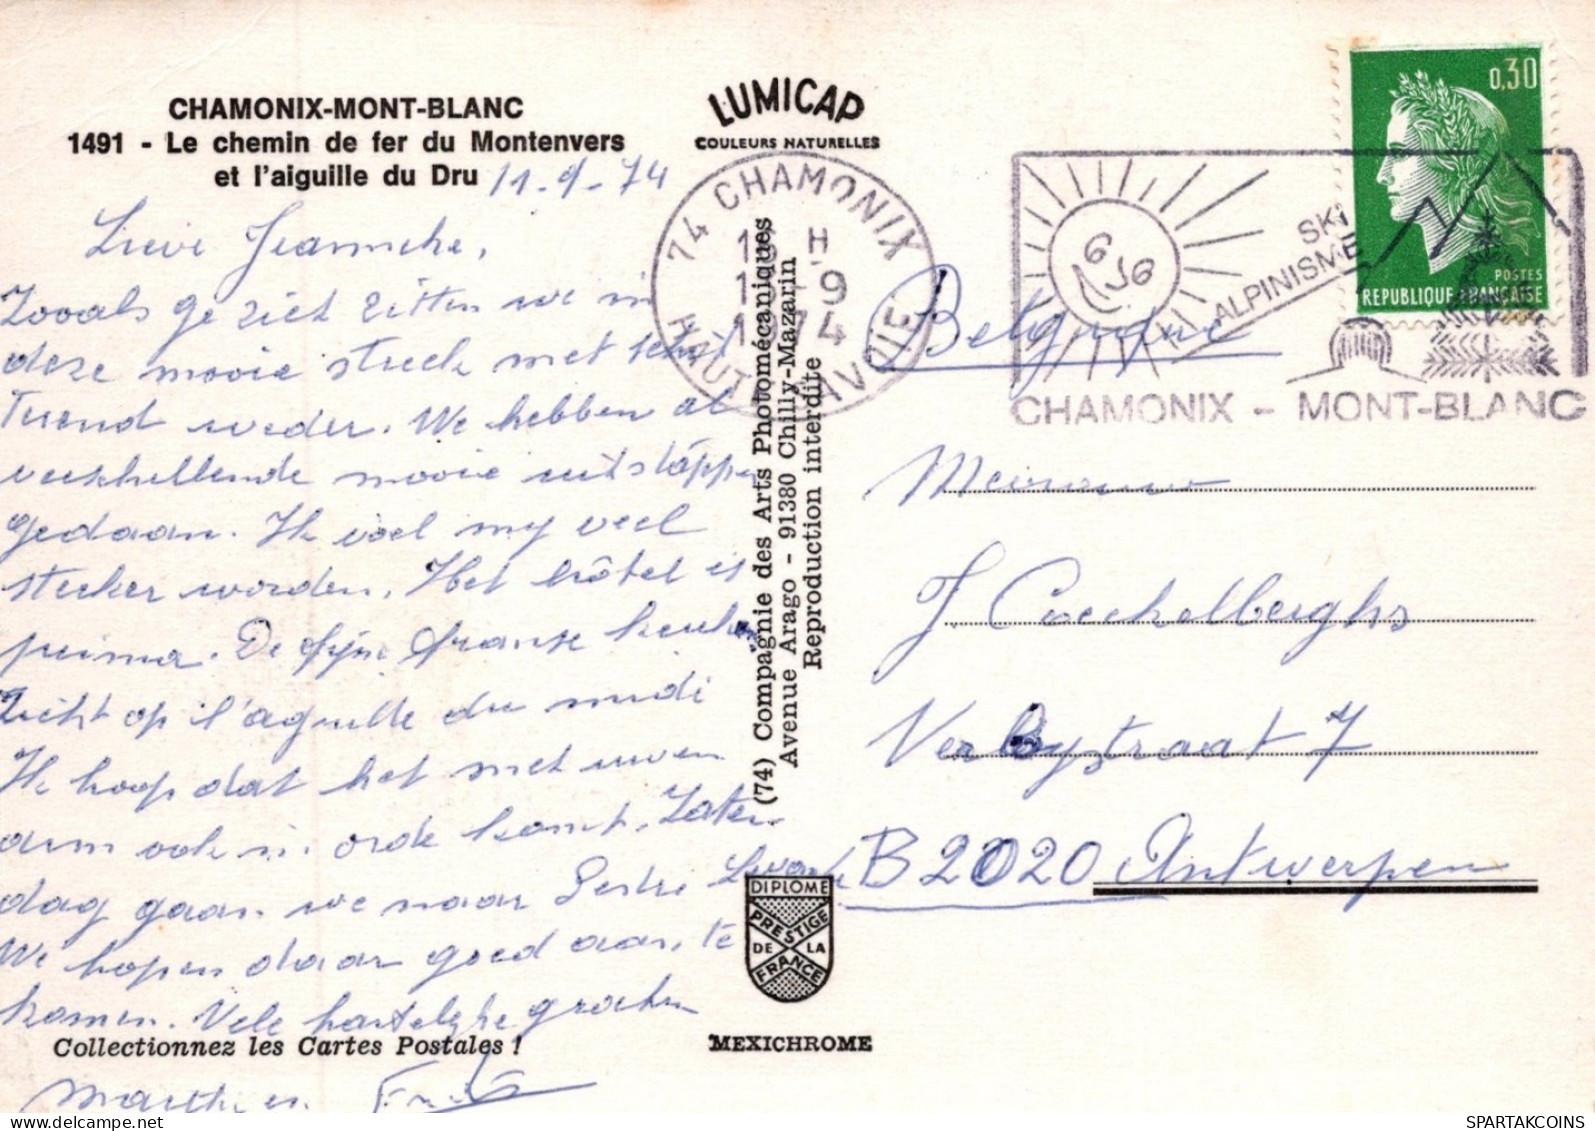 TREN TRANSPORTE Ferroviario Vintage Tarjeta Postal CPSM #PAA666.ES - Eisenbahnen